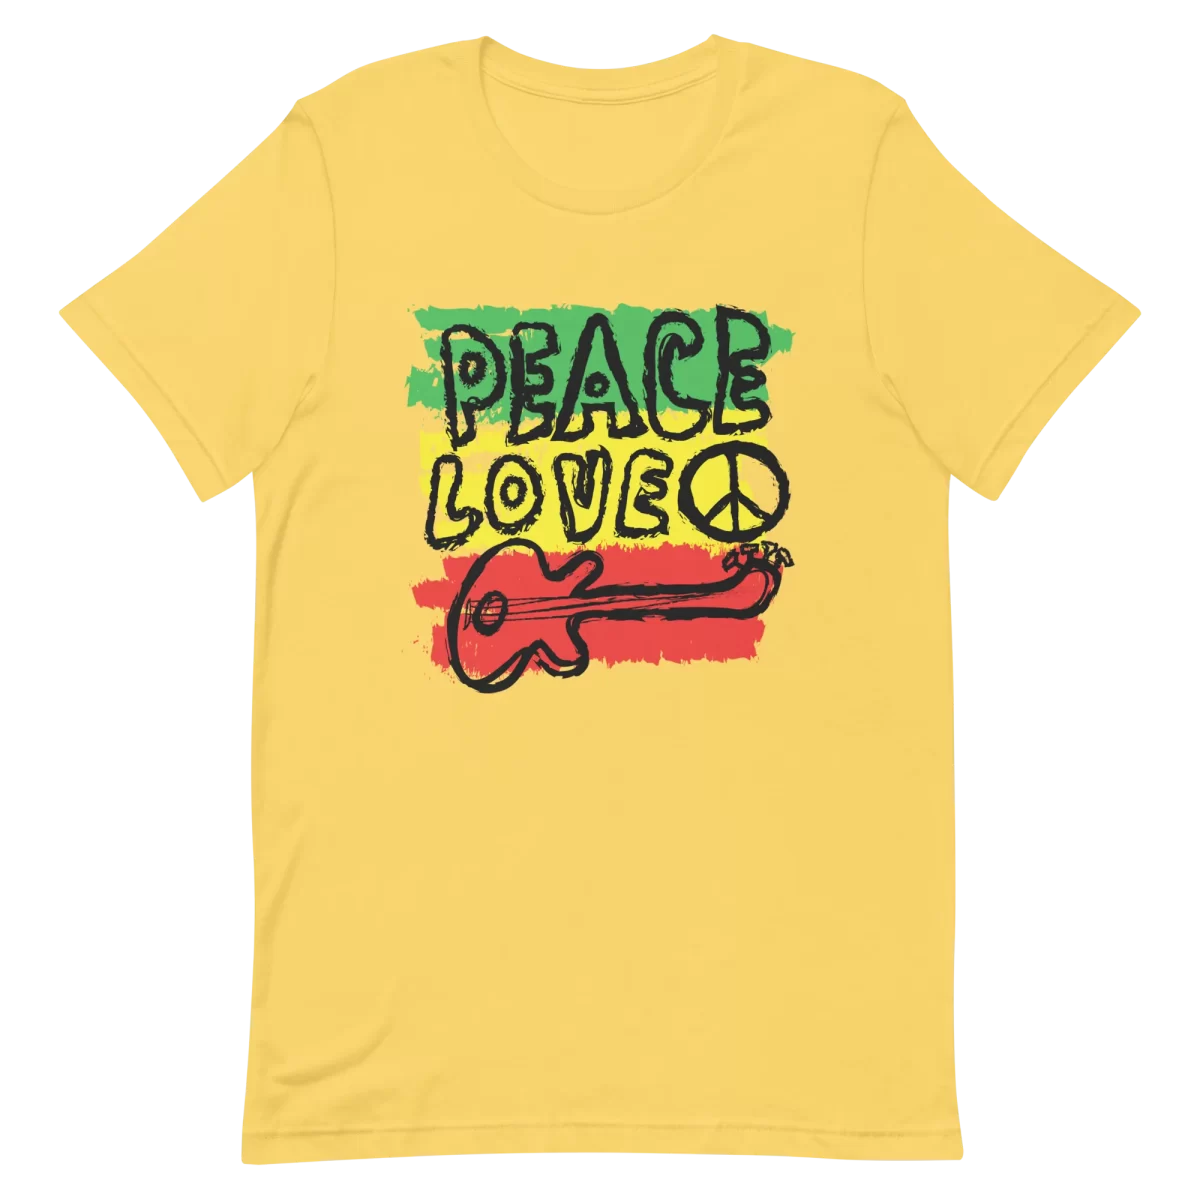 Unisex T-Shirt - Peace Love Music - Yellow